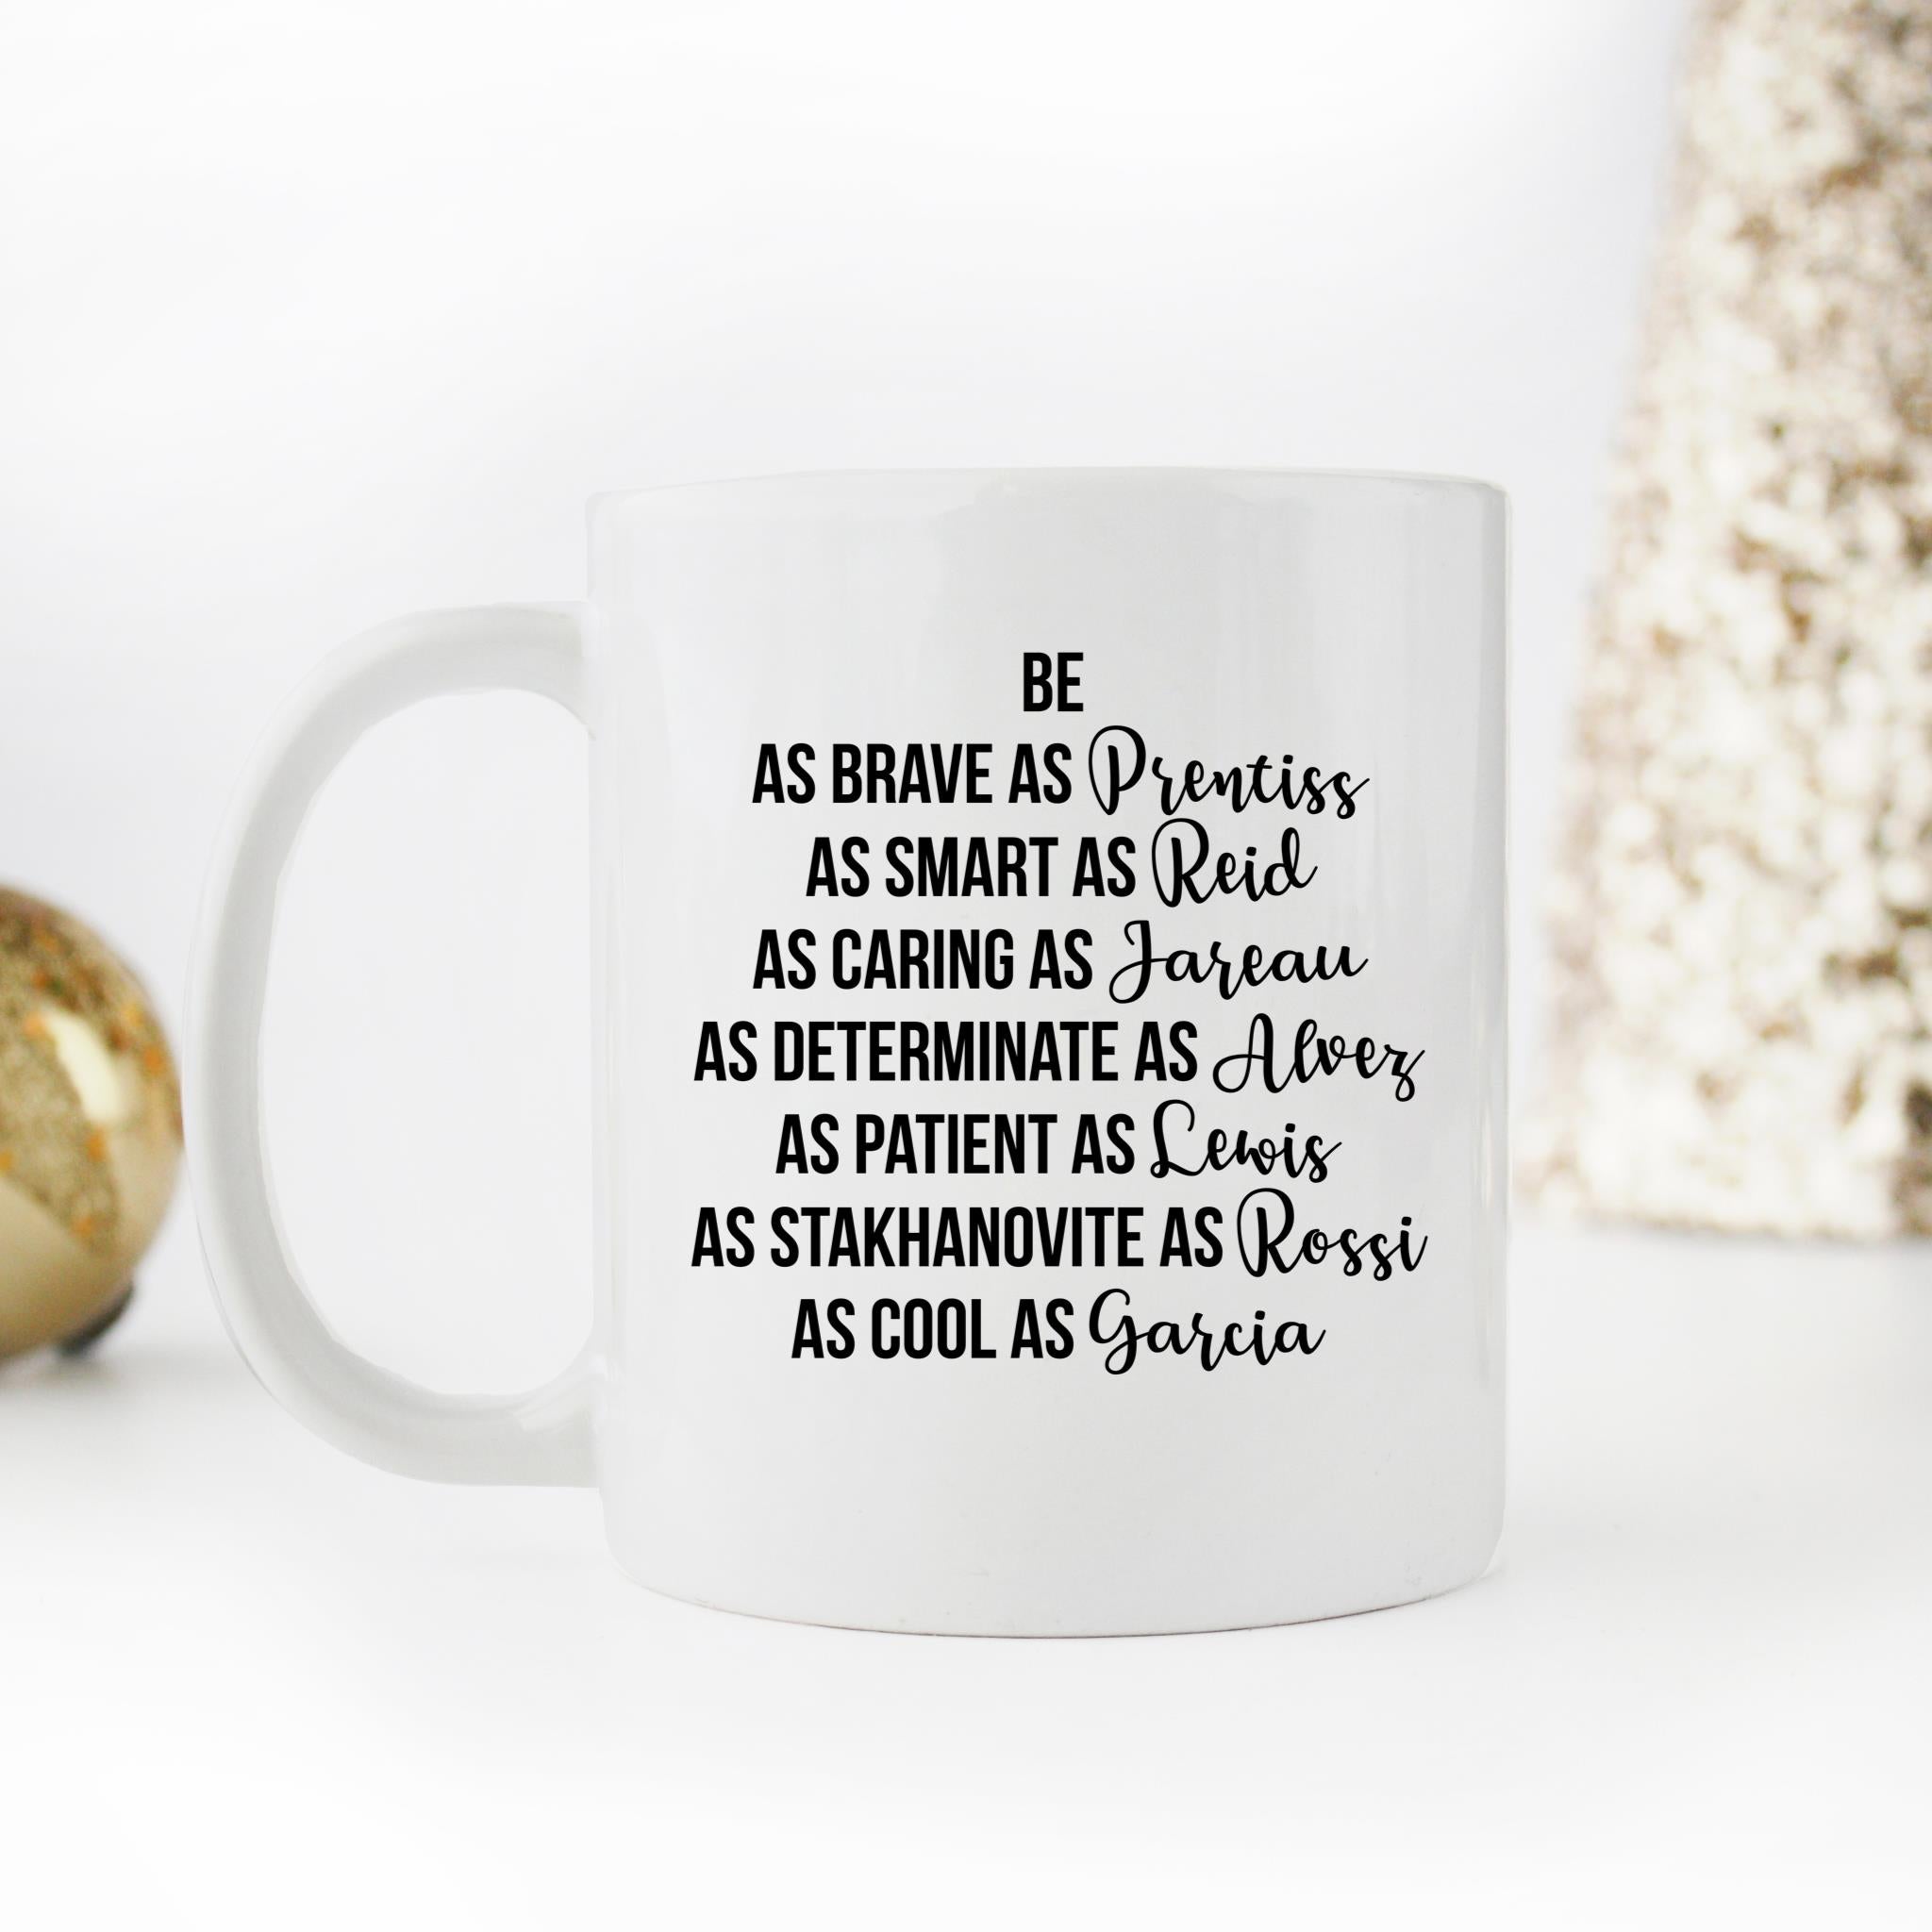 Skitongifts Funny Ceramic Novelty Coffee Mug Brave As Prentiss,Smart As Reid,Caring As Jareau PHEwAwX